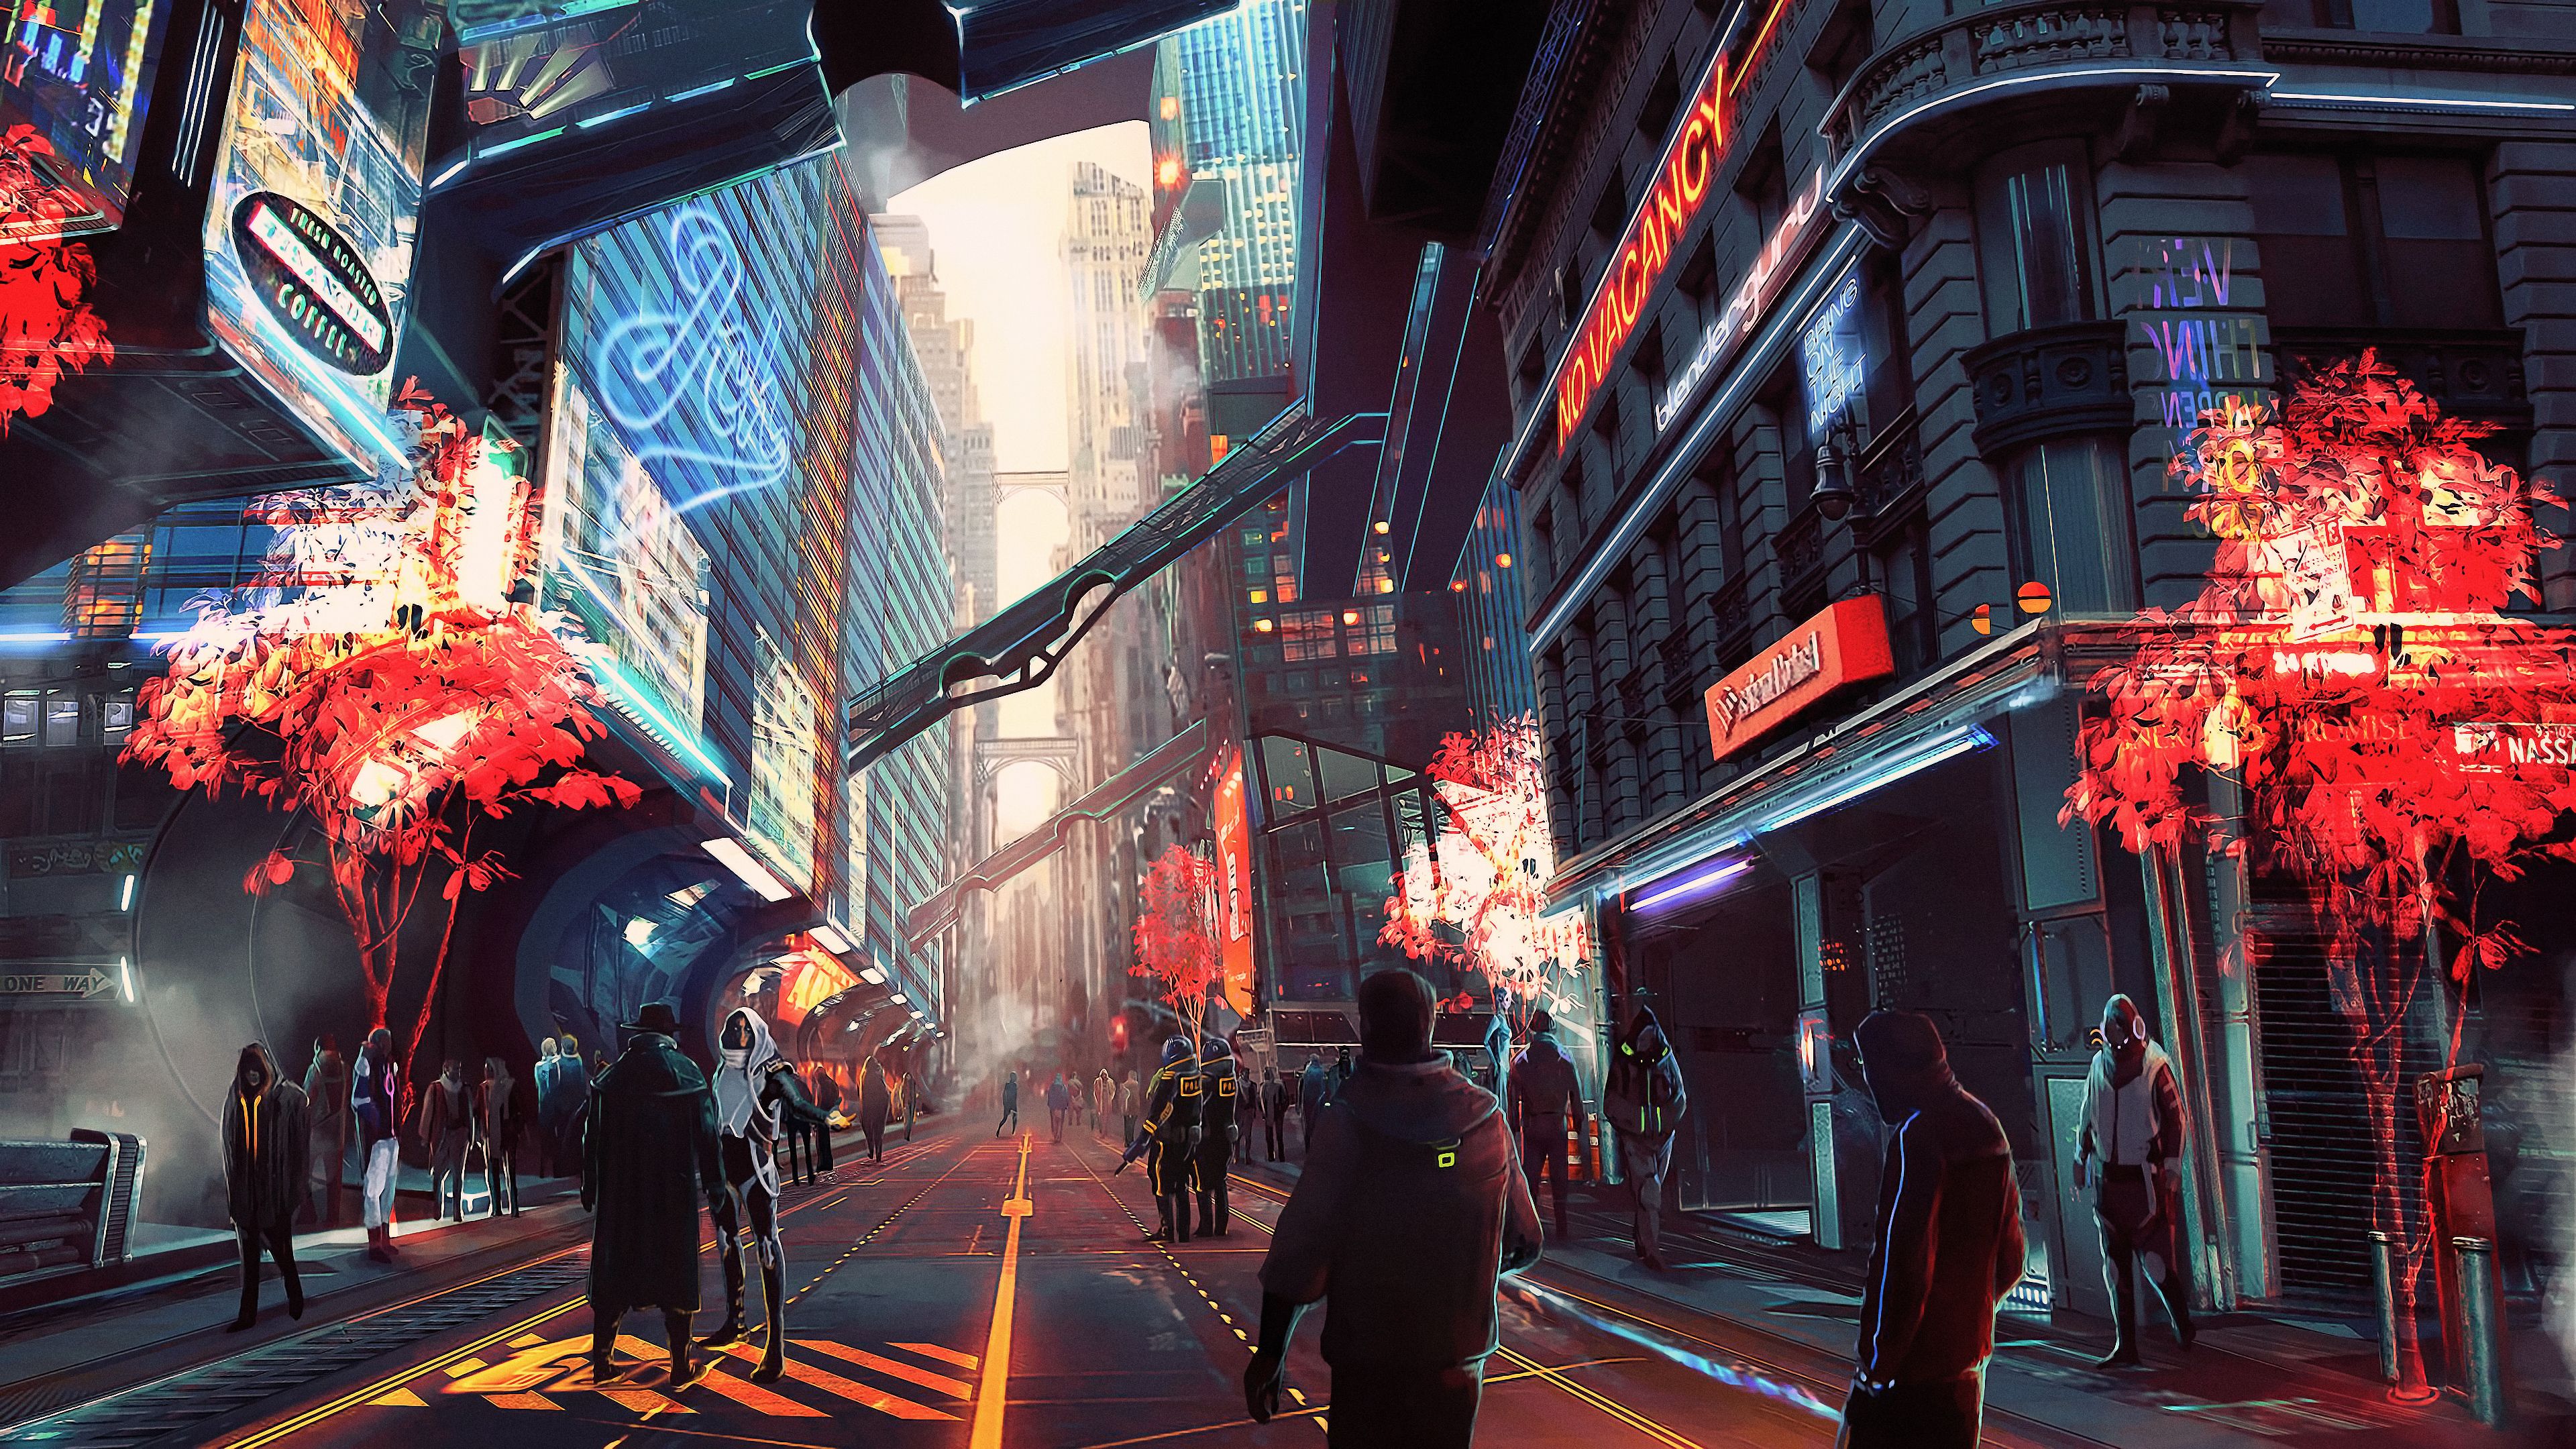 Cyberpunk City Future Digital Art, HD Artist, 4k Wallpaper, Image, Background, Photo and Picture